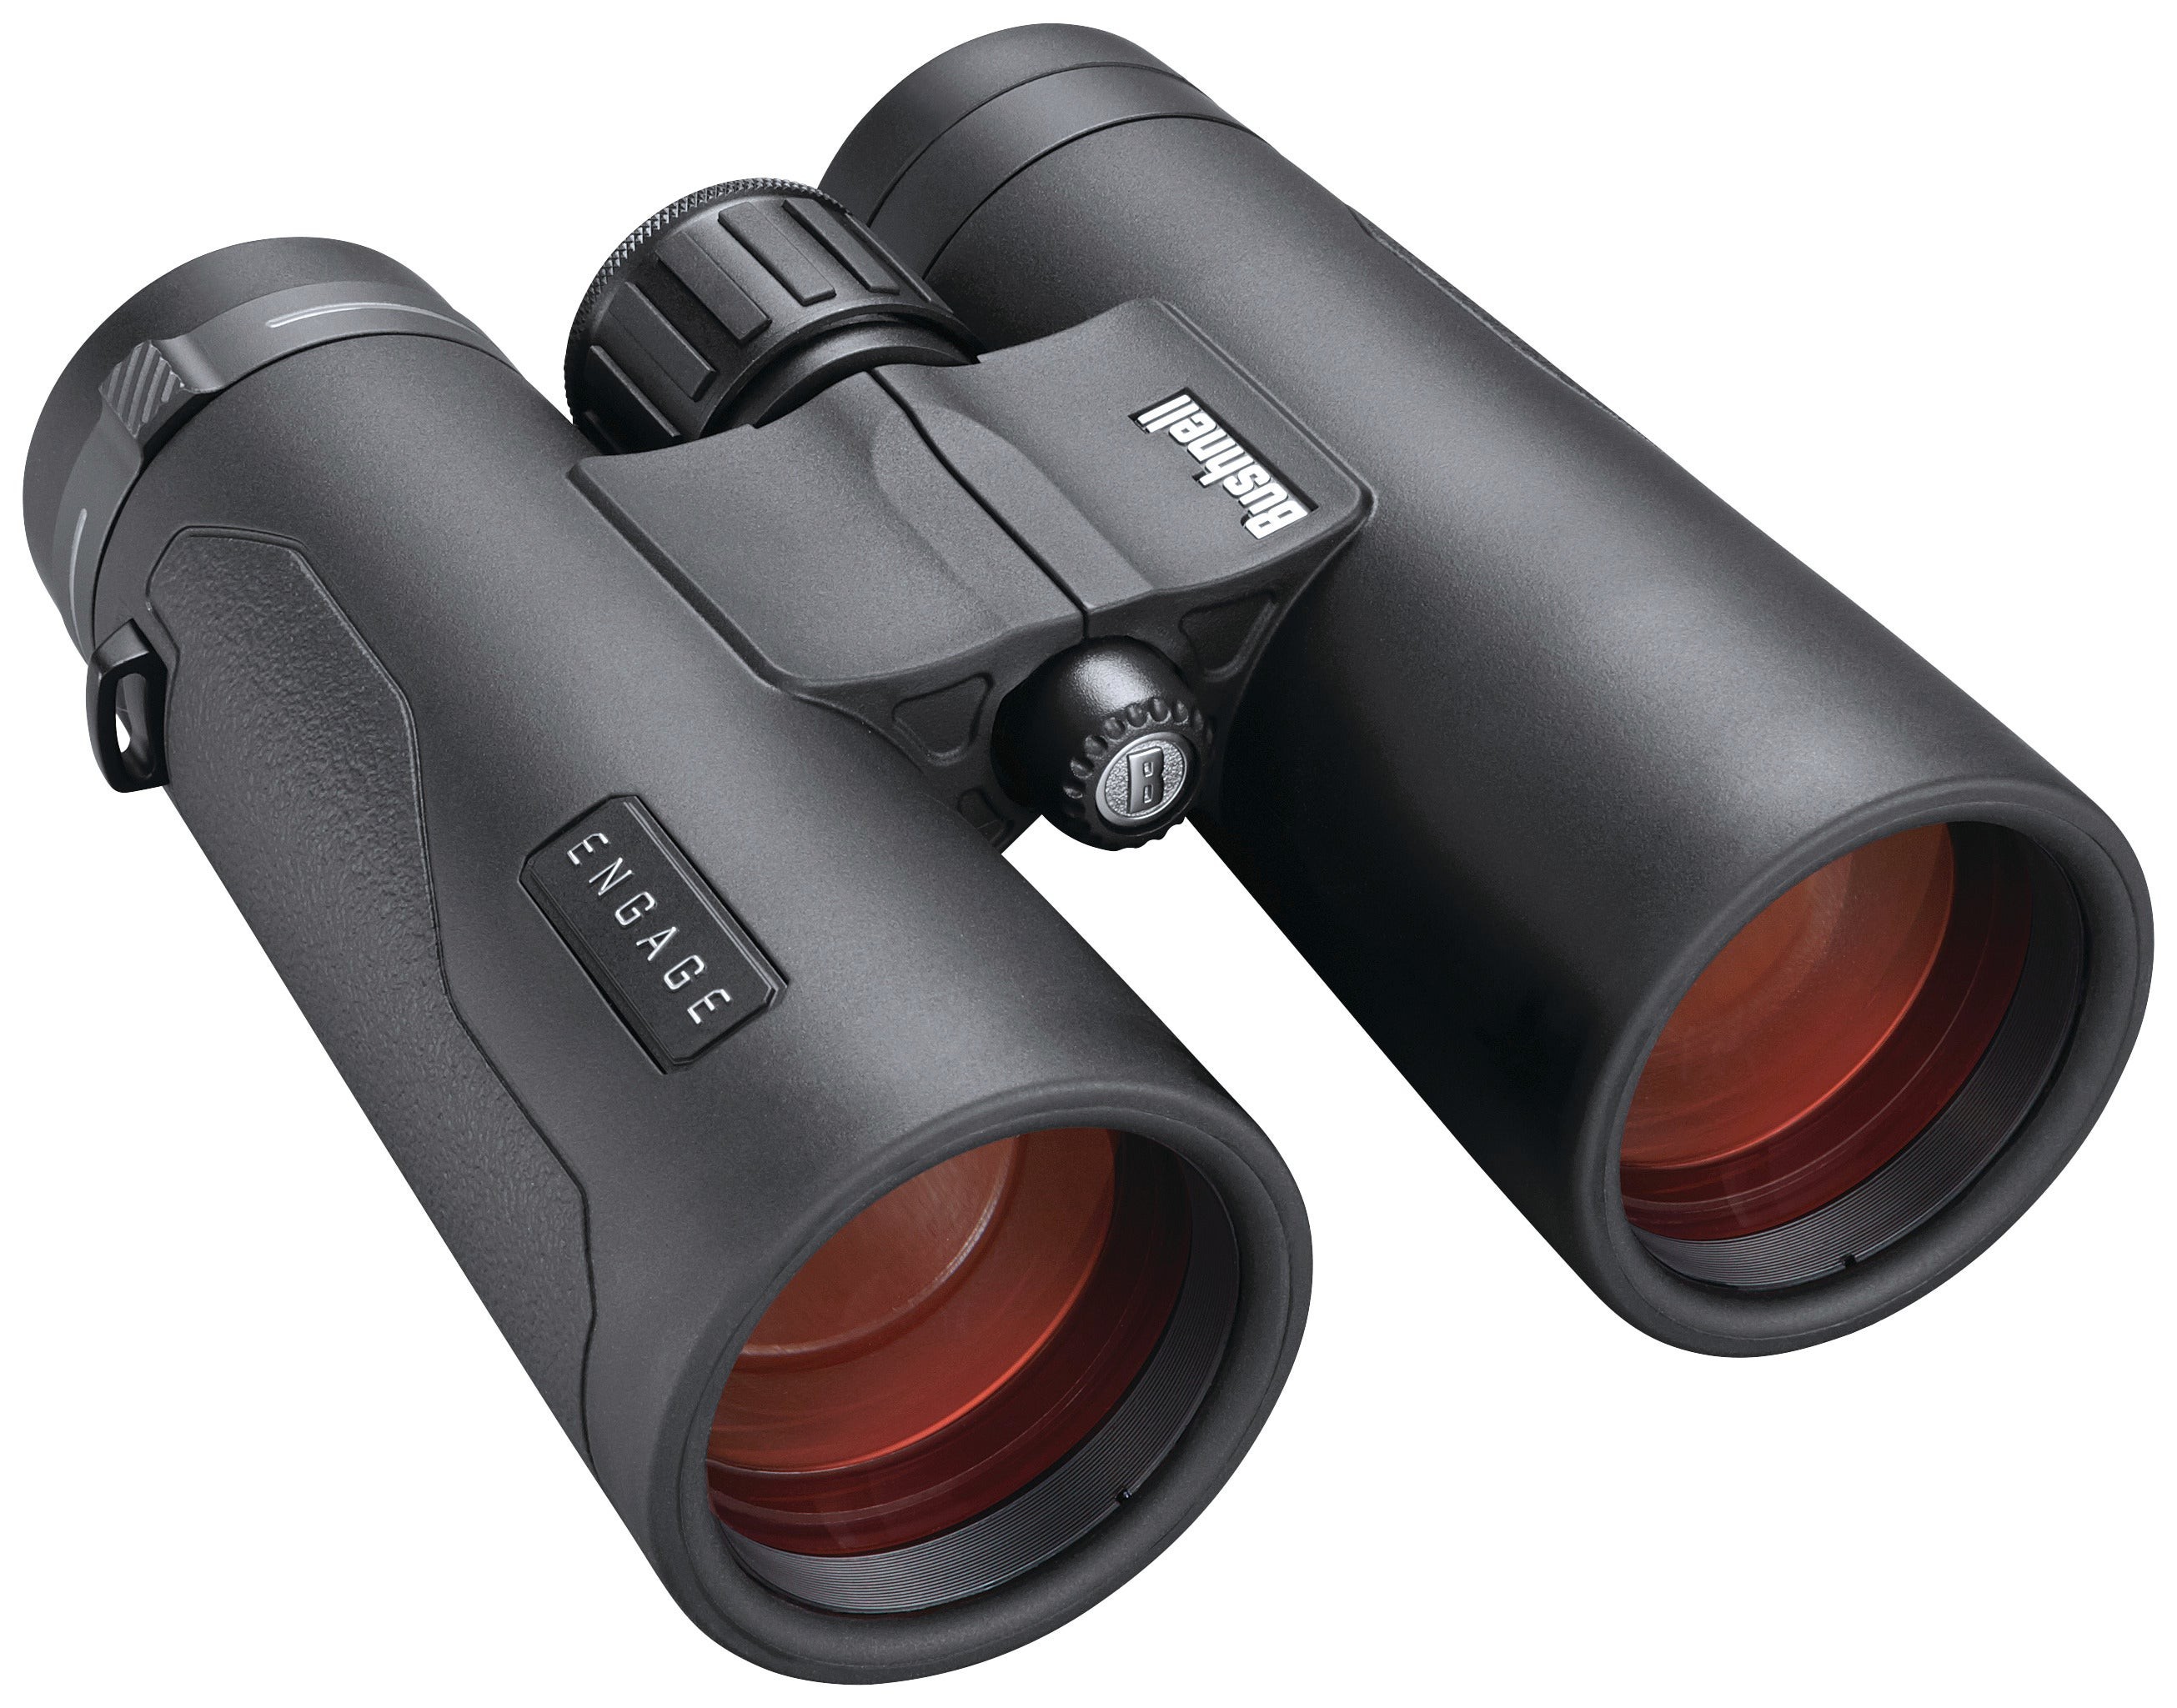 Engage 10x42mm Binoculars w/ ED Prime Glass